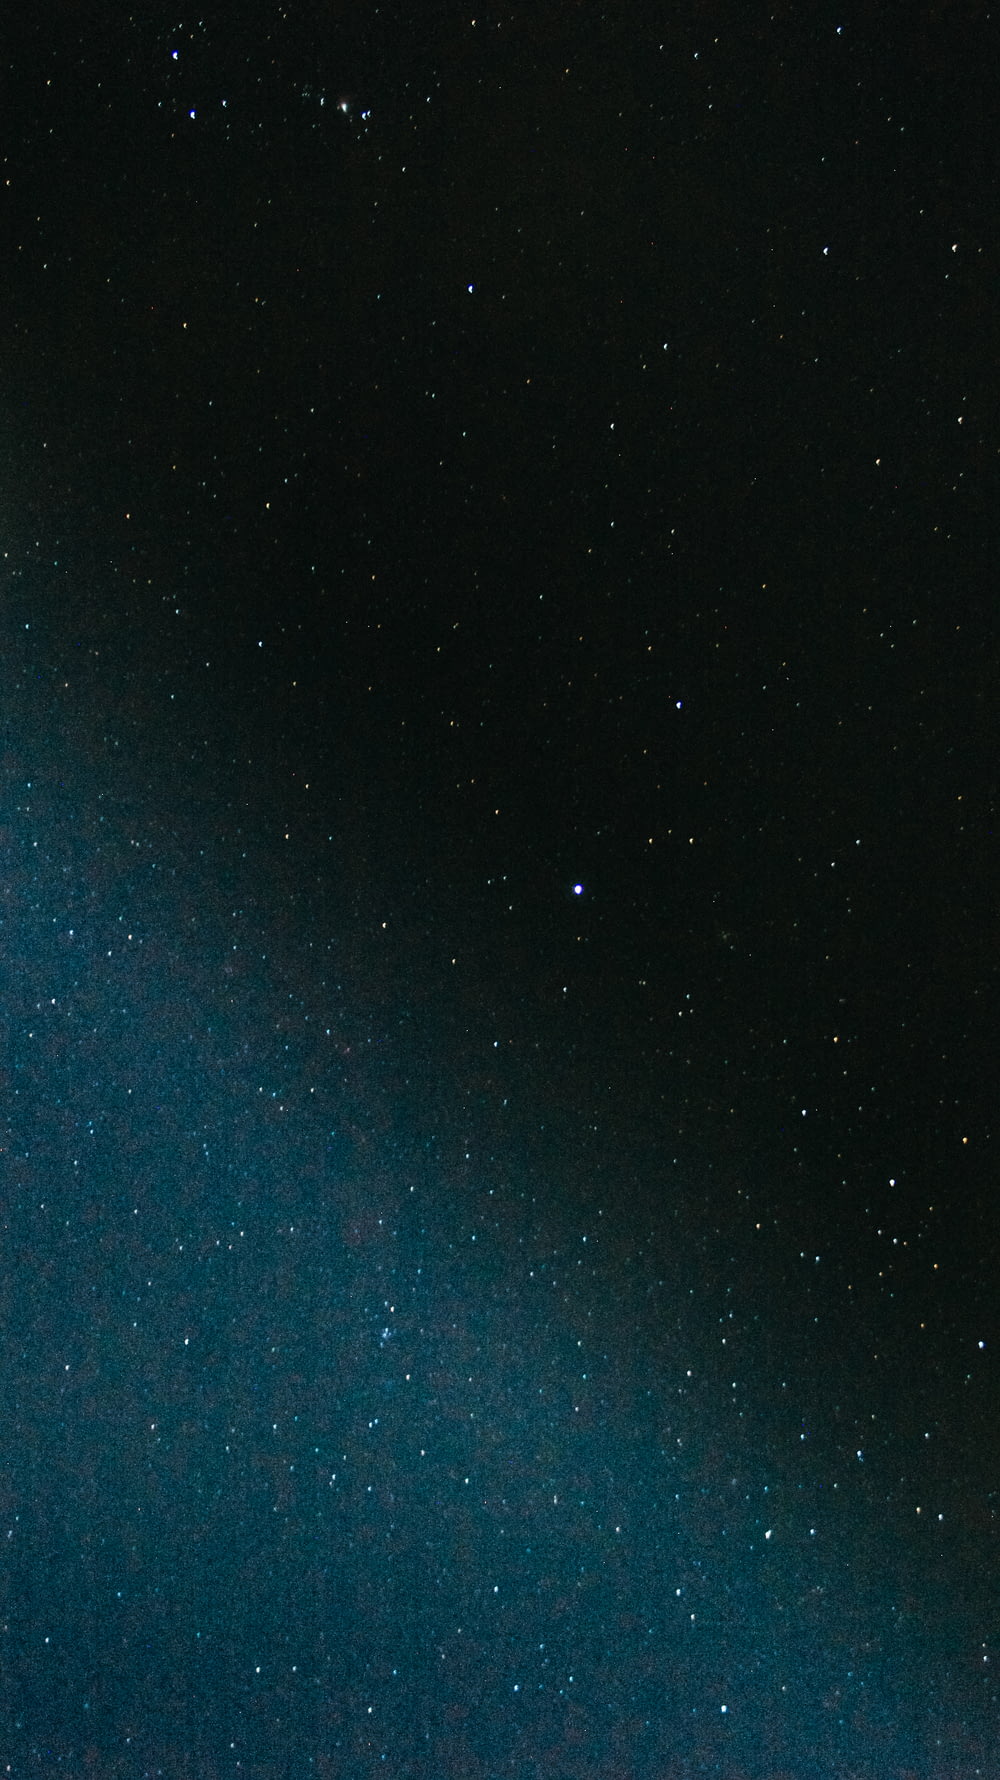 blue and black starry night sky